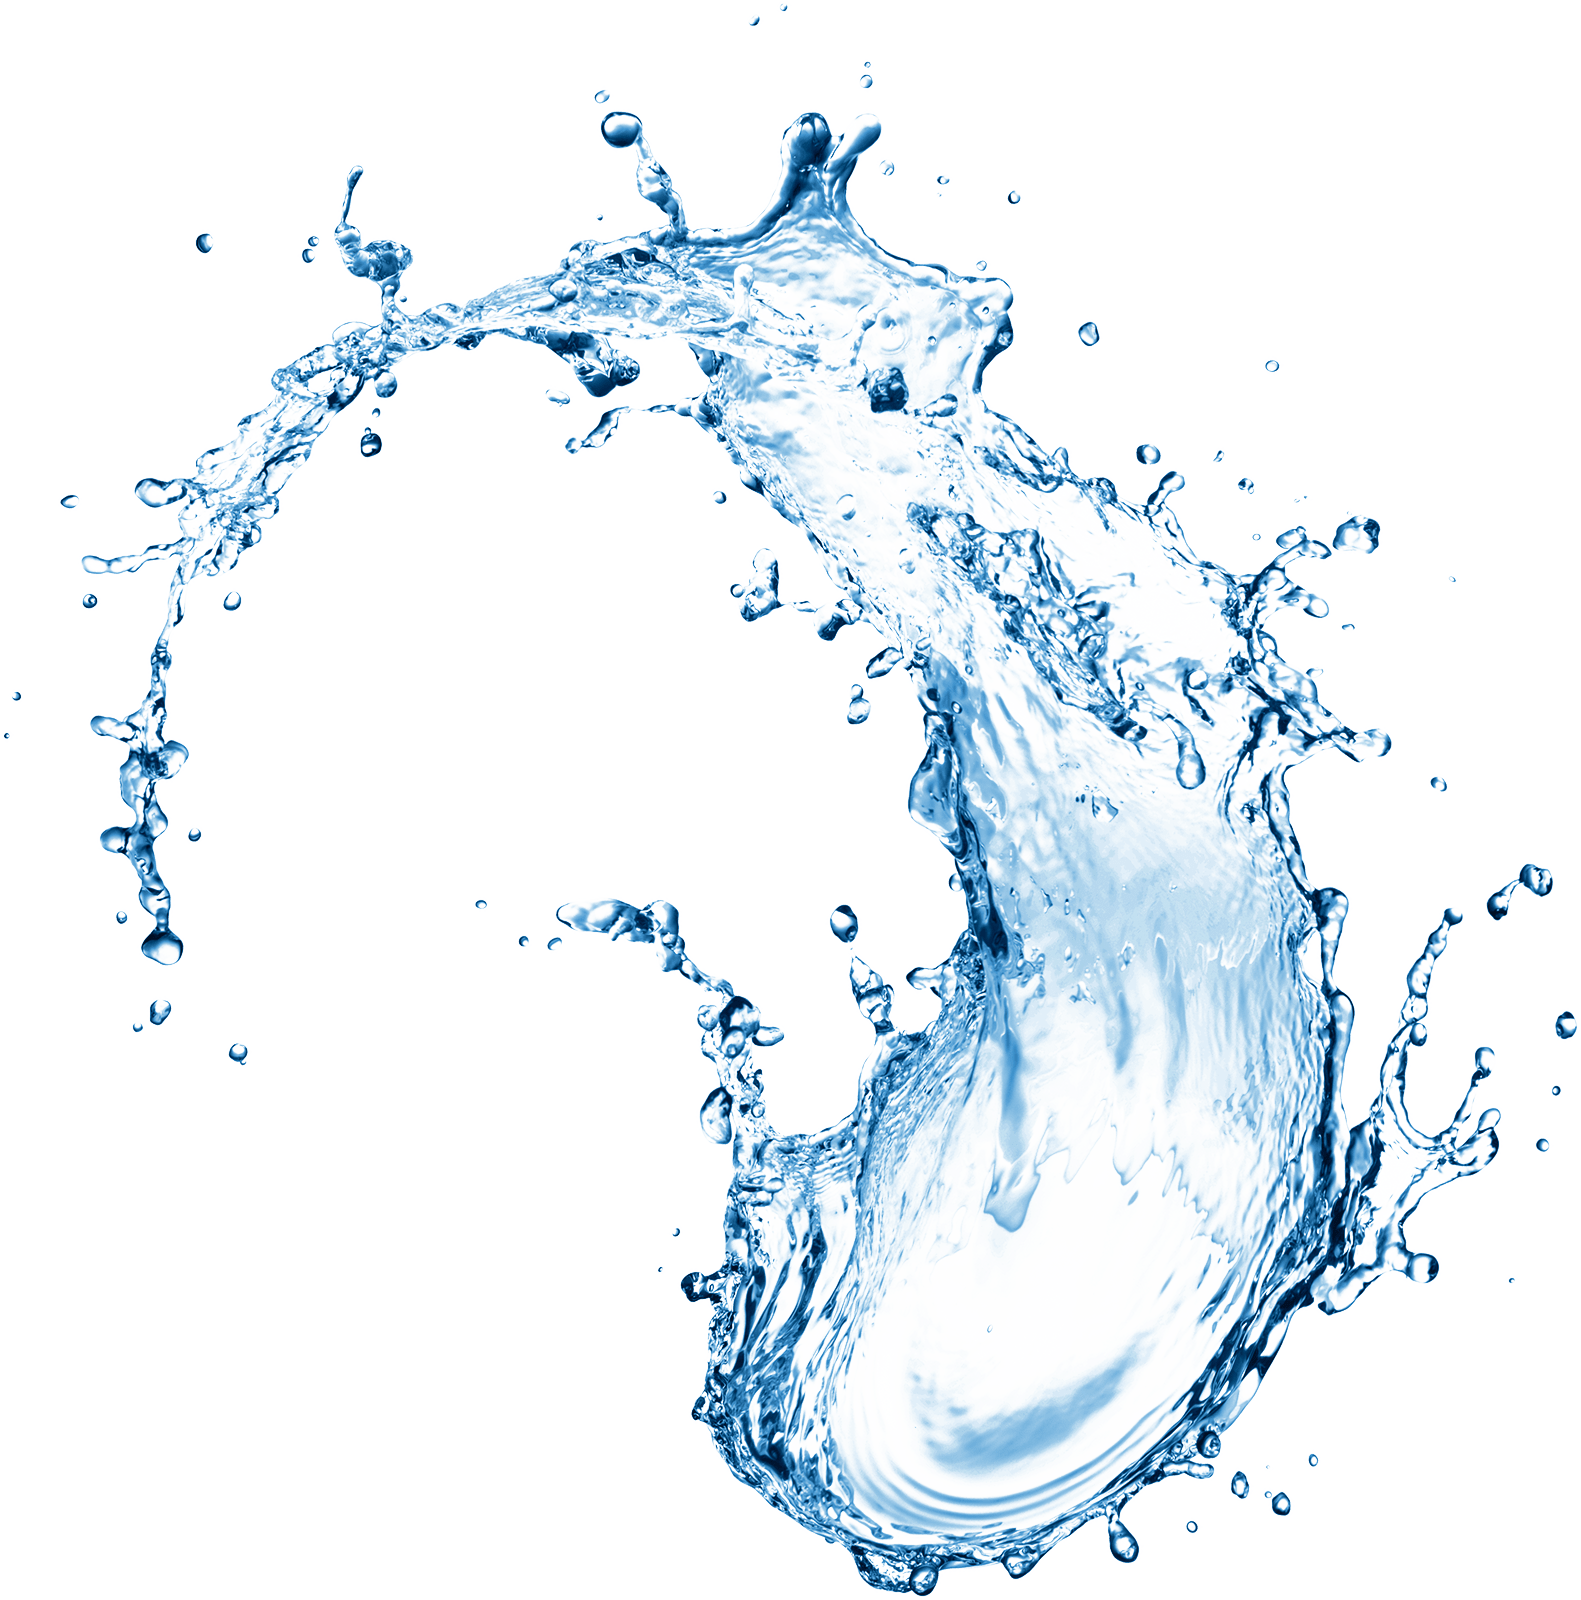 Blue Water Splash Drops PNG - Water Drop Splash PNG